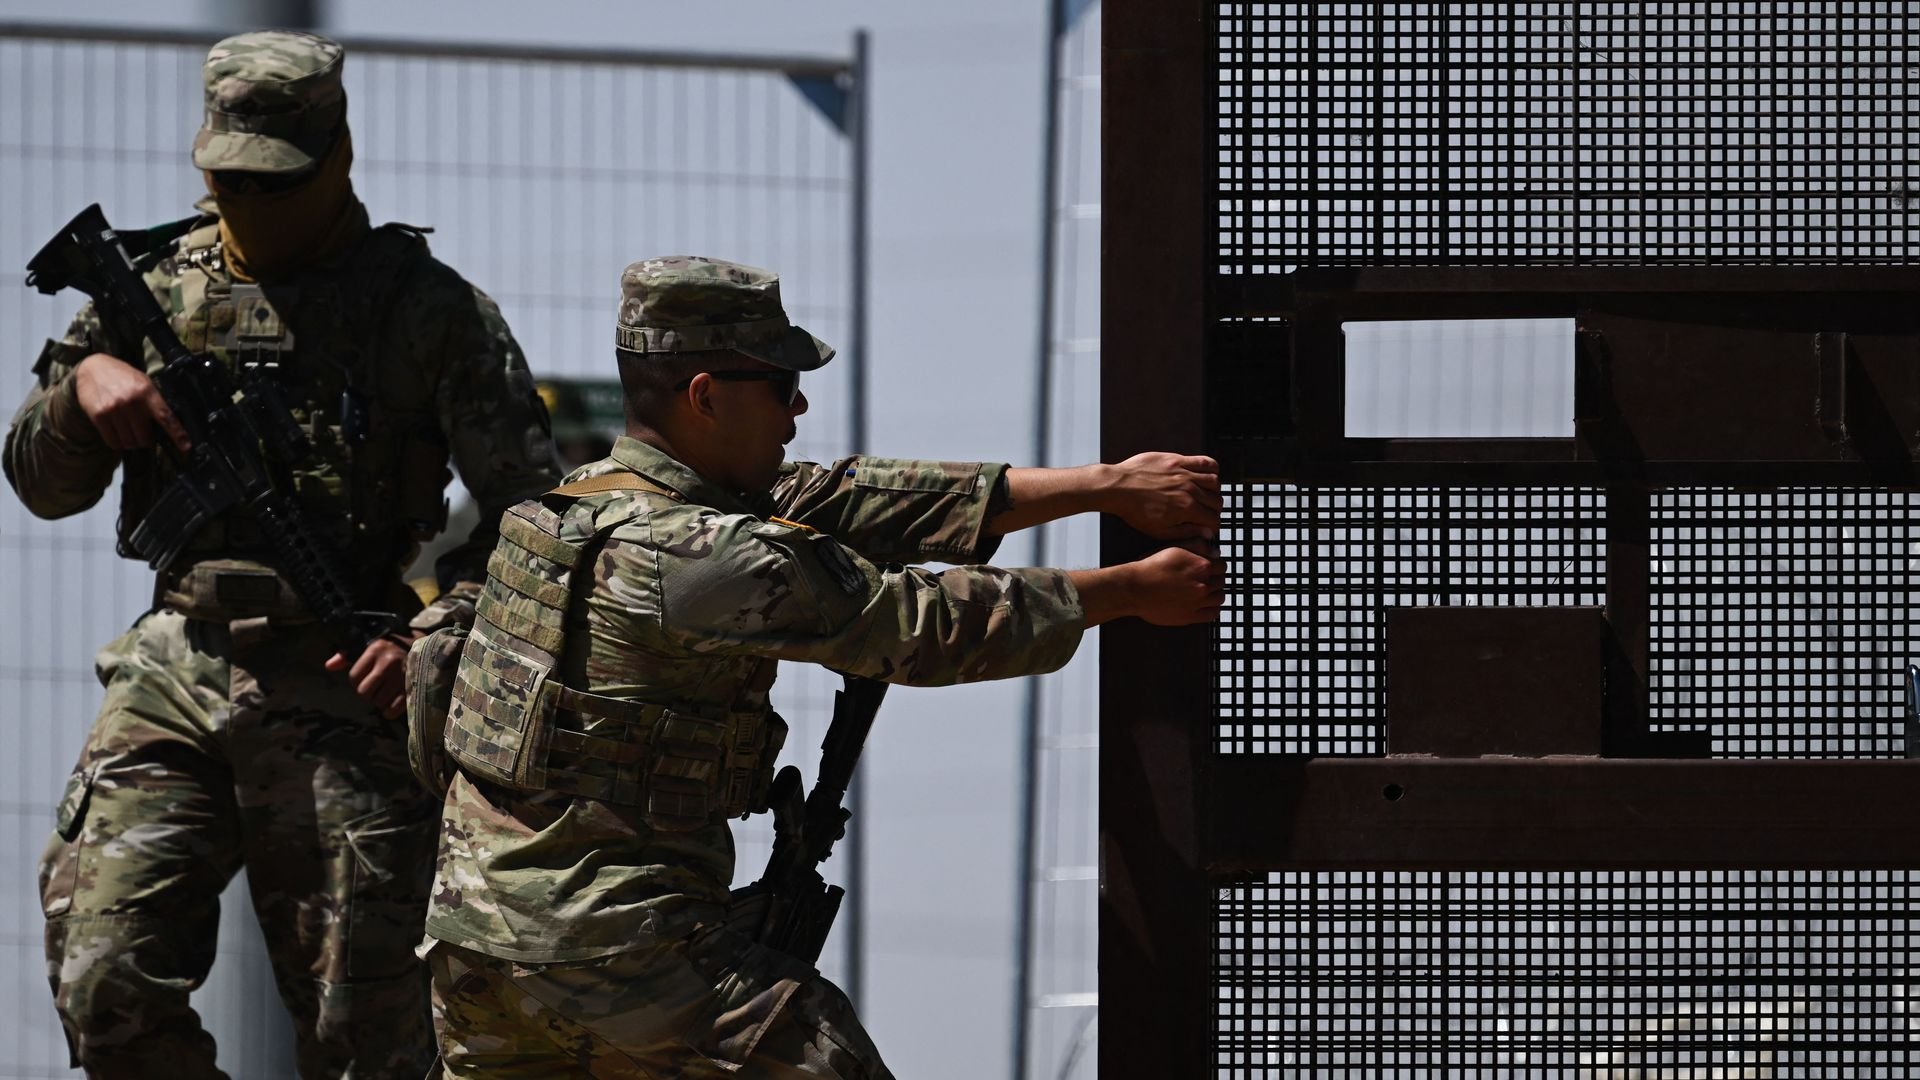 Biden embraces tough policies at southwest border